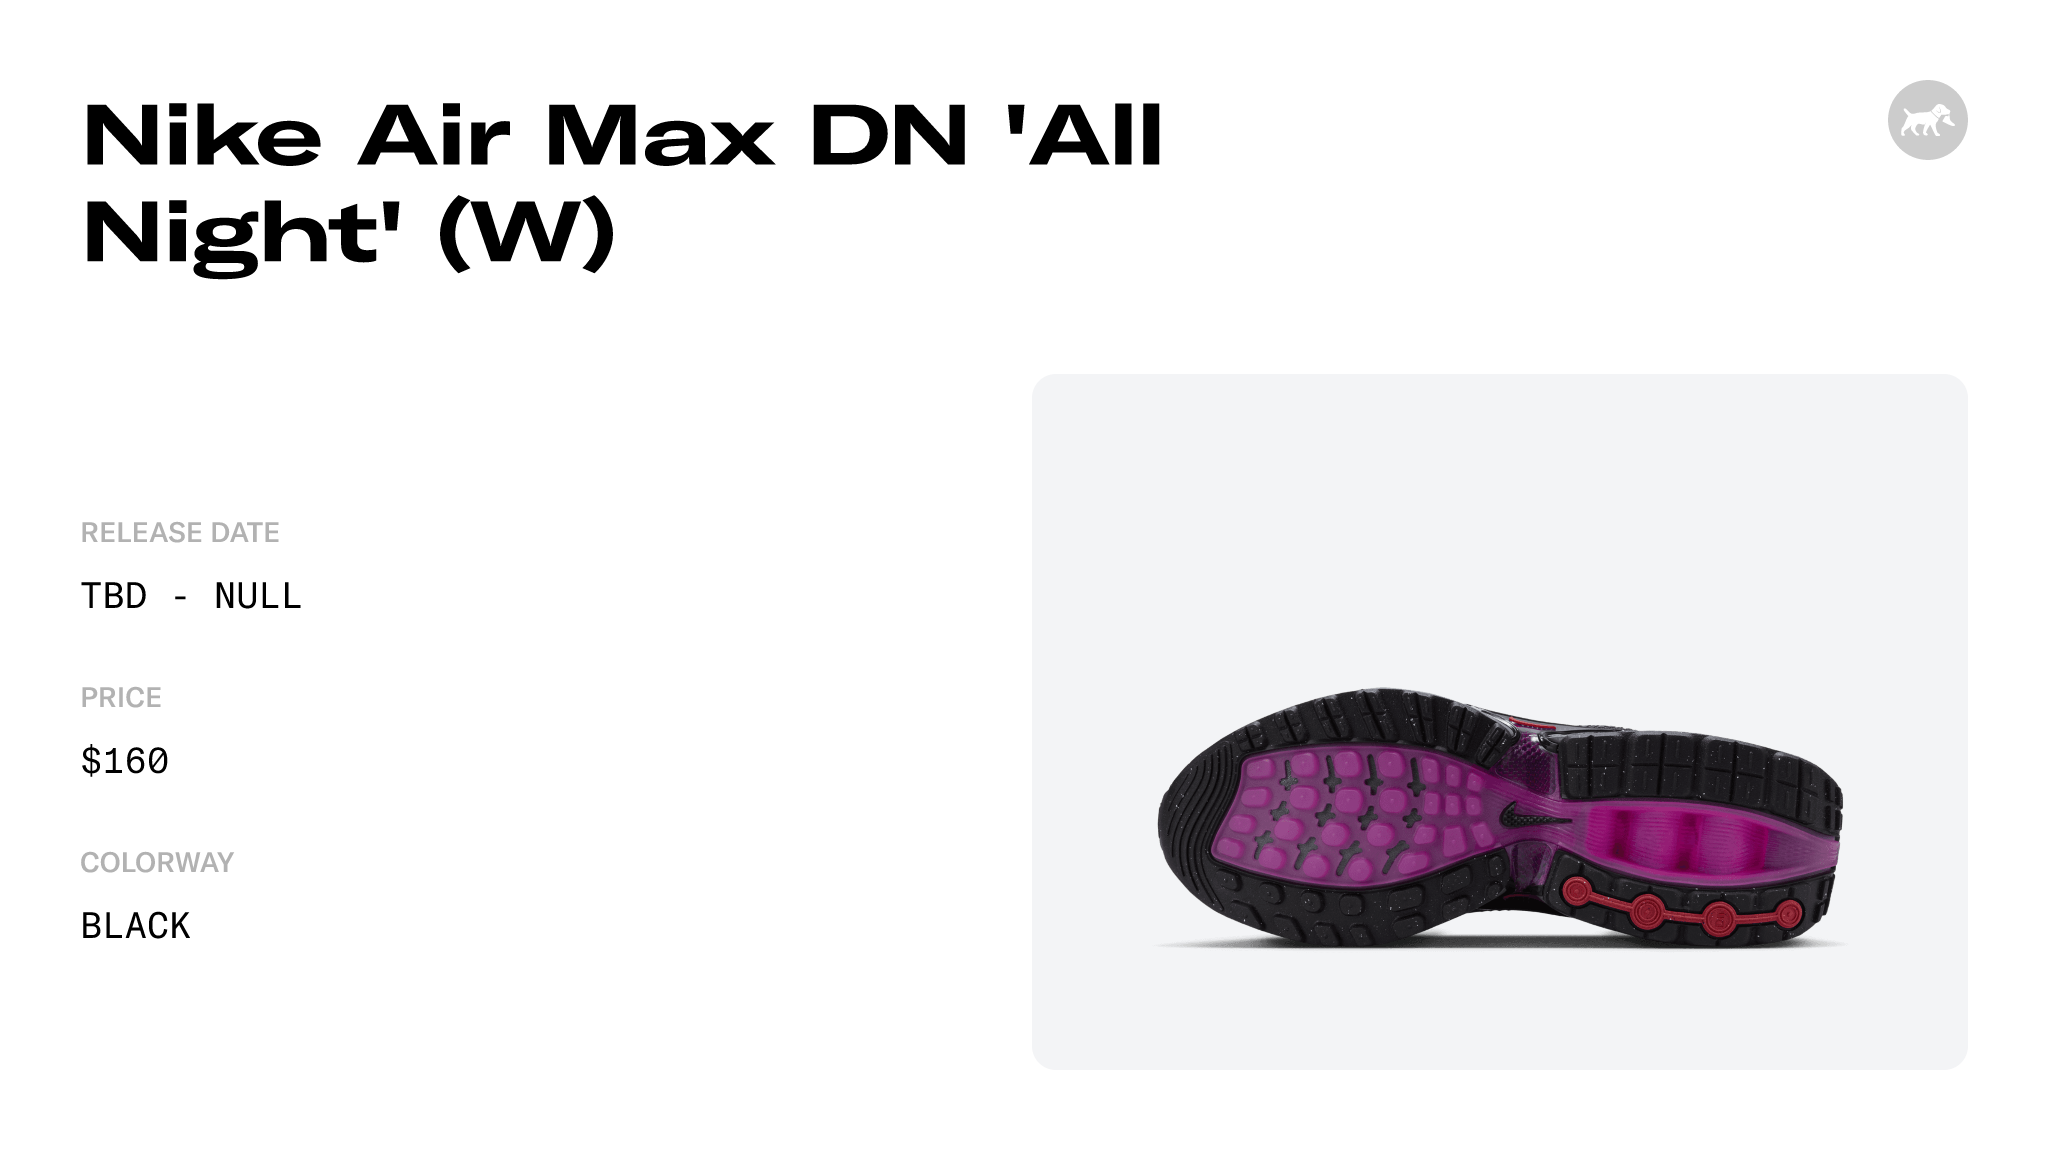 Nike Air Max DN 'All Night' (W) - FJ3145-005 Raffles and Release Date